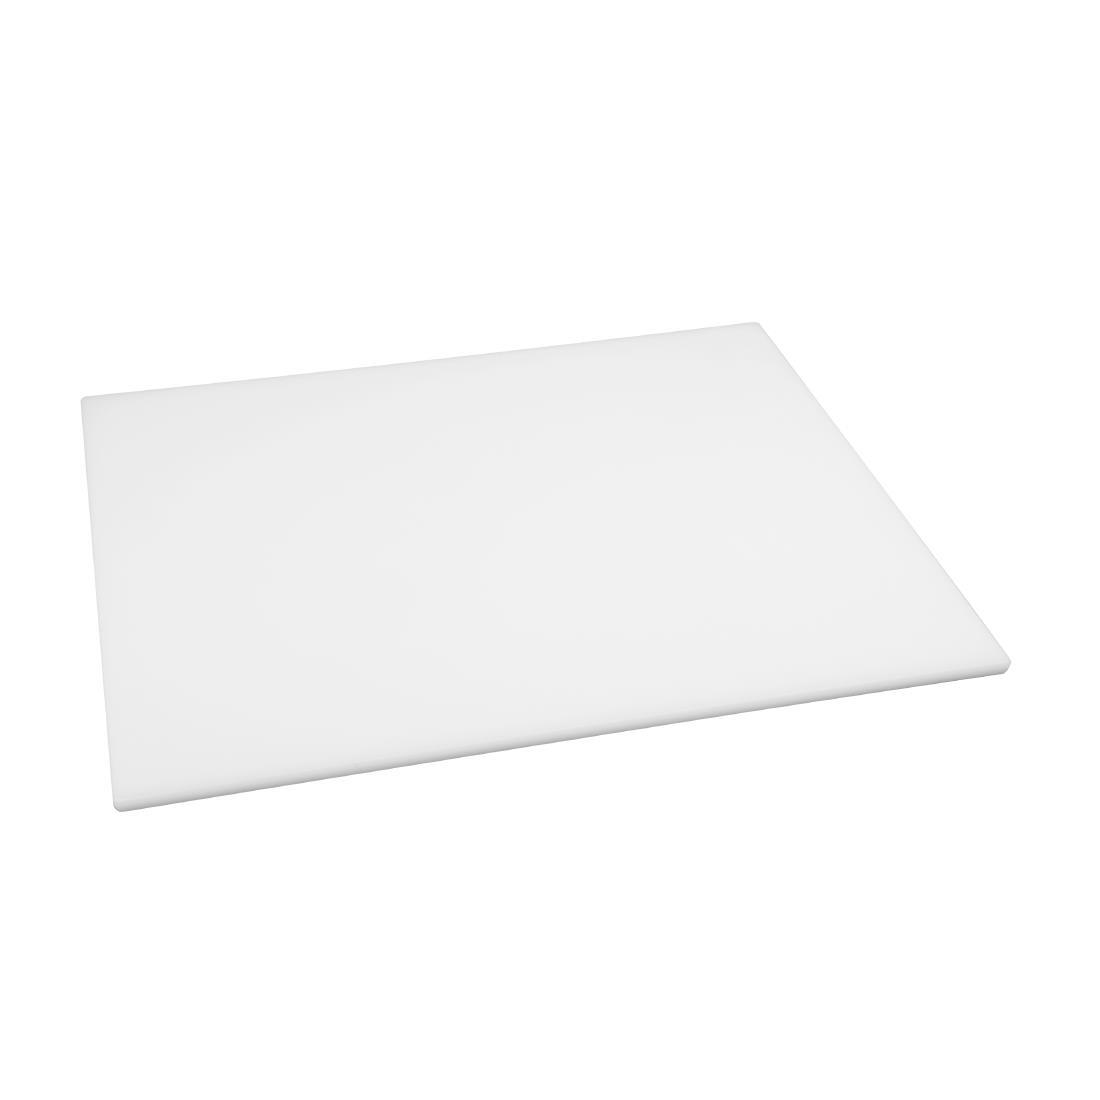 Hygiplas Low Density White Chopping Board Large - HC881  - 4